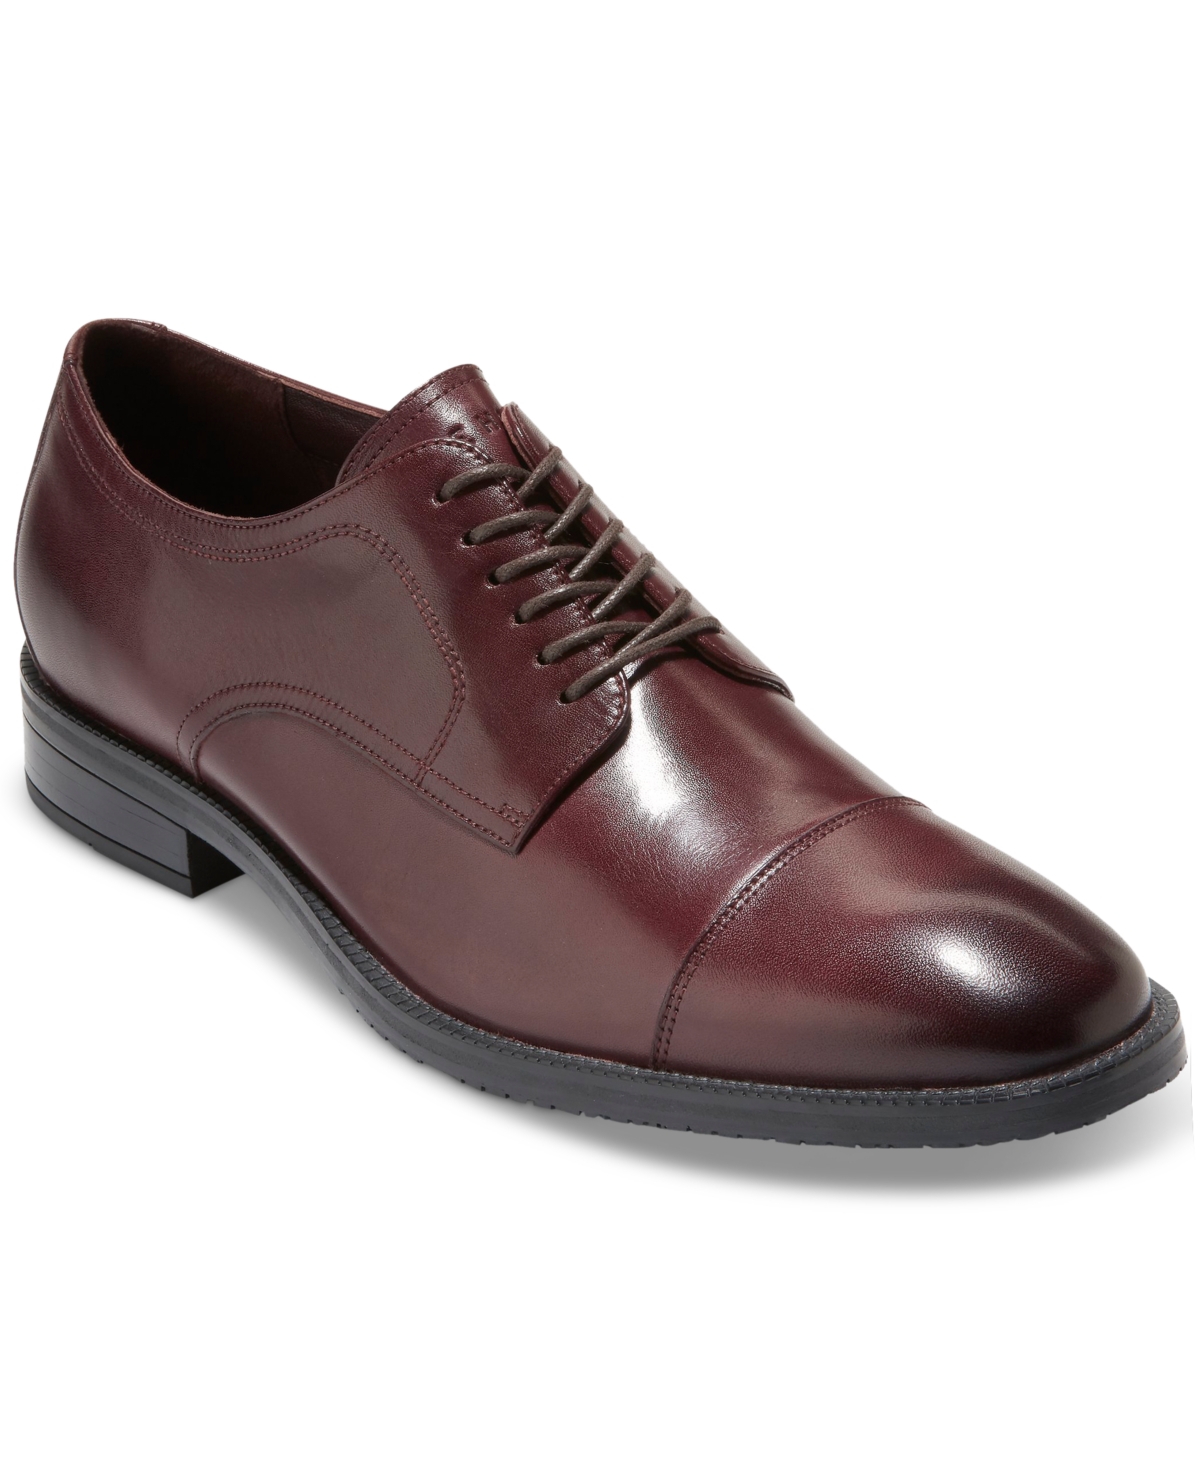 Men's Modern Essentials Lace Up Cap Toe Oxford Dress Shoes - Bloodstone/black